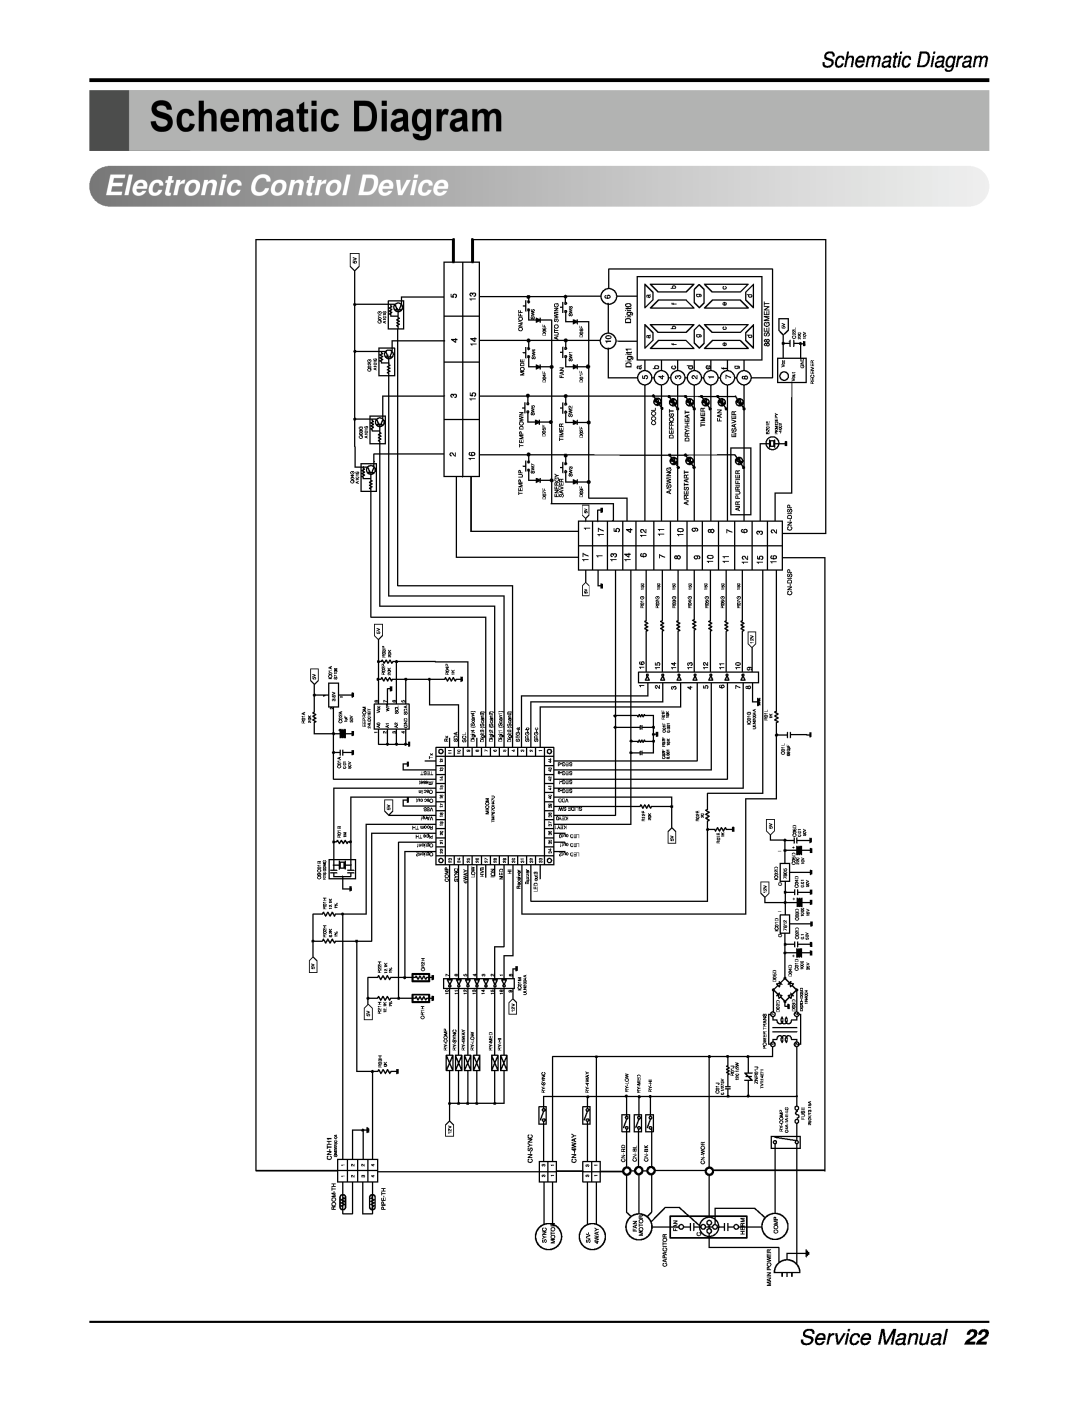 Heat Controller RAD-243A, RAD-183A service manual Electronic Control, Schematic Diagram, Device 